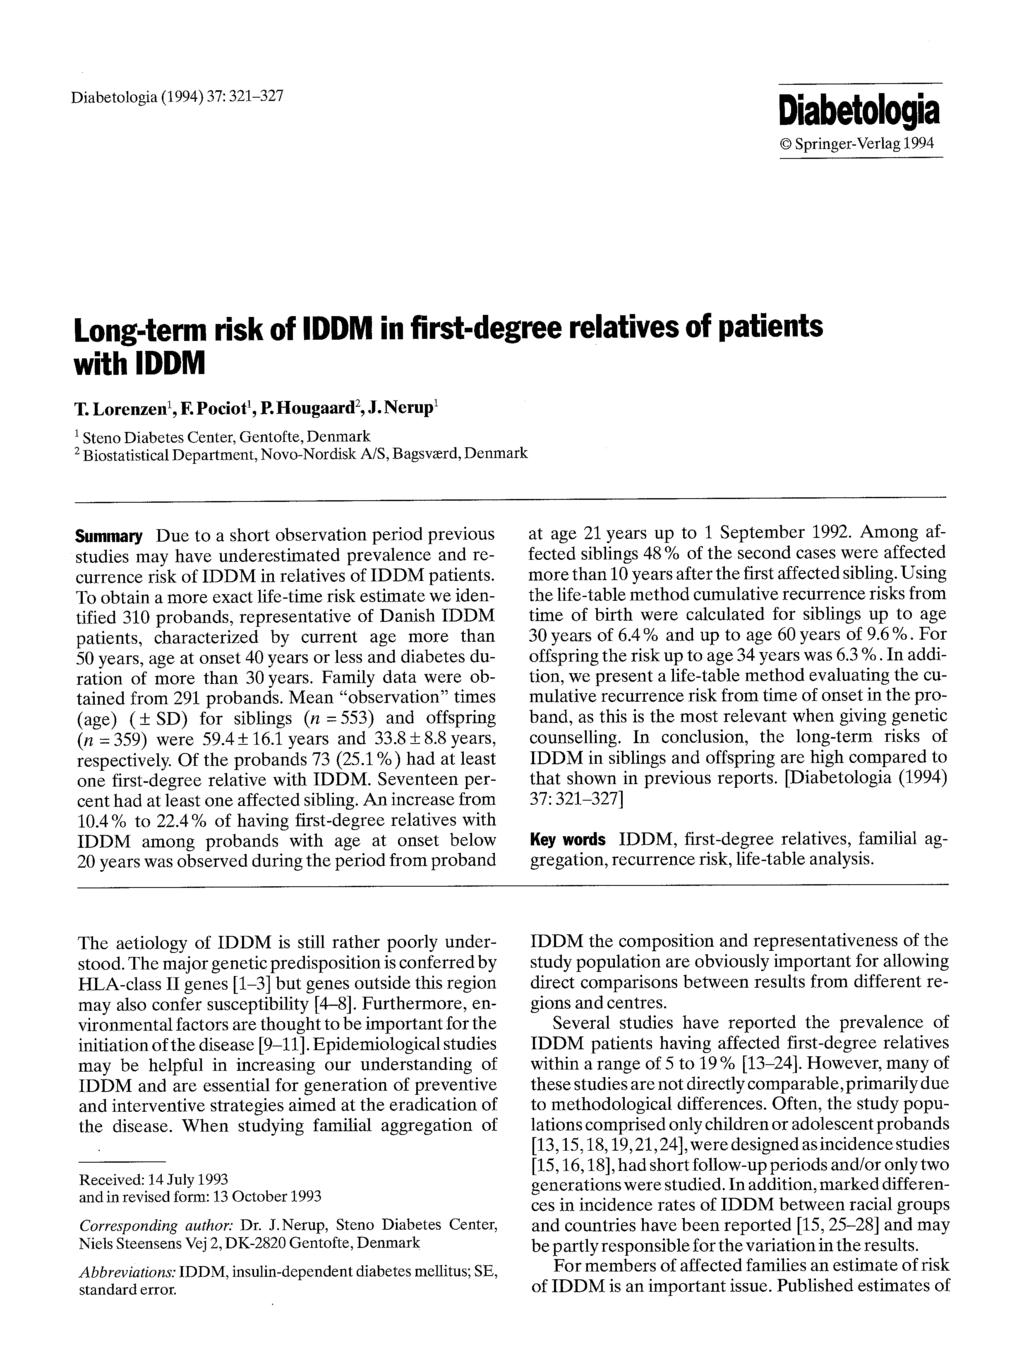 Diabetologia (1994) 37:321-327 Diabetologia Springer-Verlag 1994 Long-term risk of IDDM in first-degree relatives of patients with IDDM T. Lorenzen 1, E Pociot I, e. Hougaard 2, J.